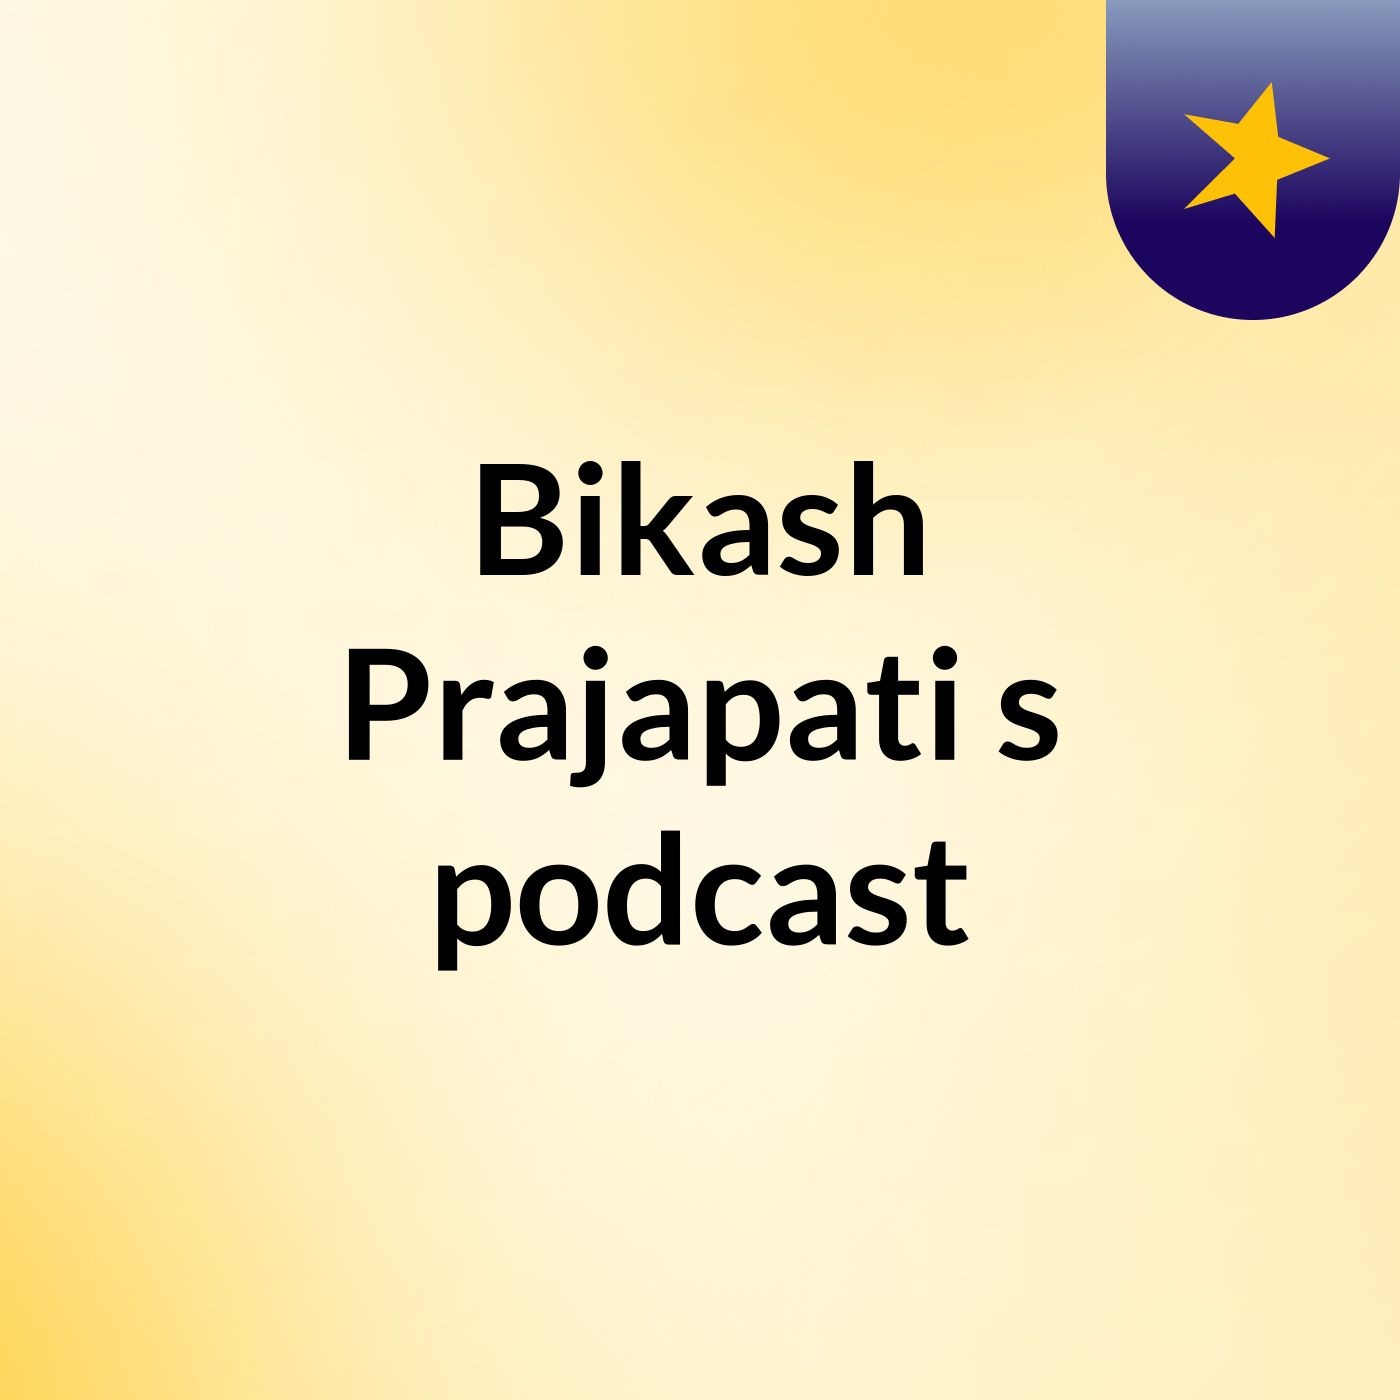 Bikash Prajapati's podcast